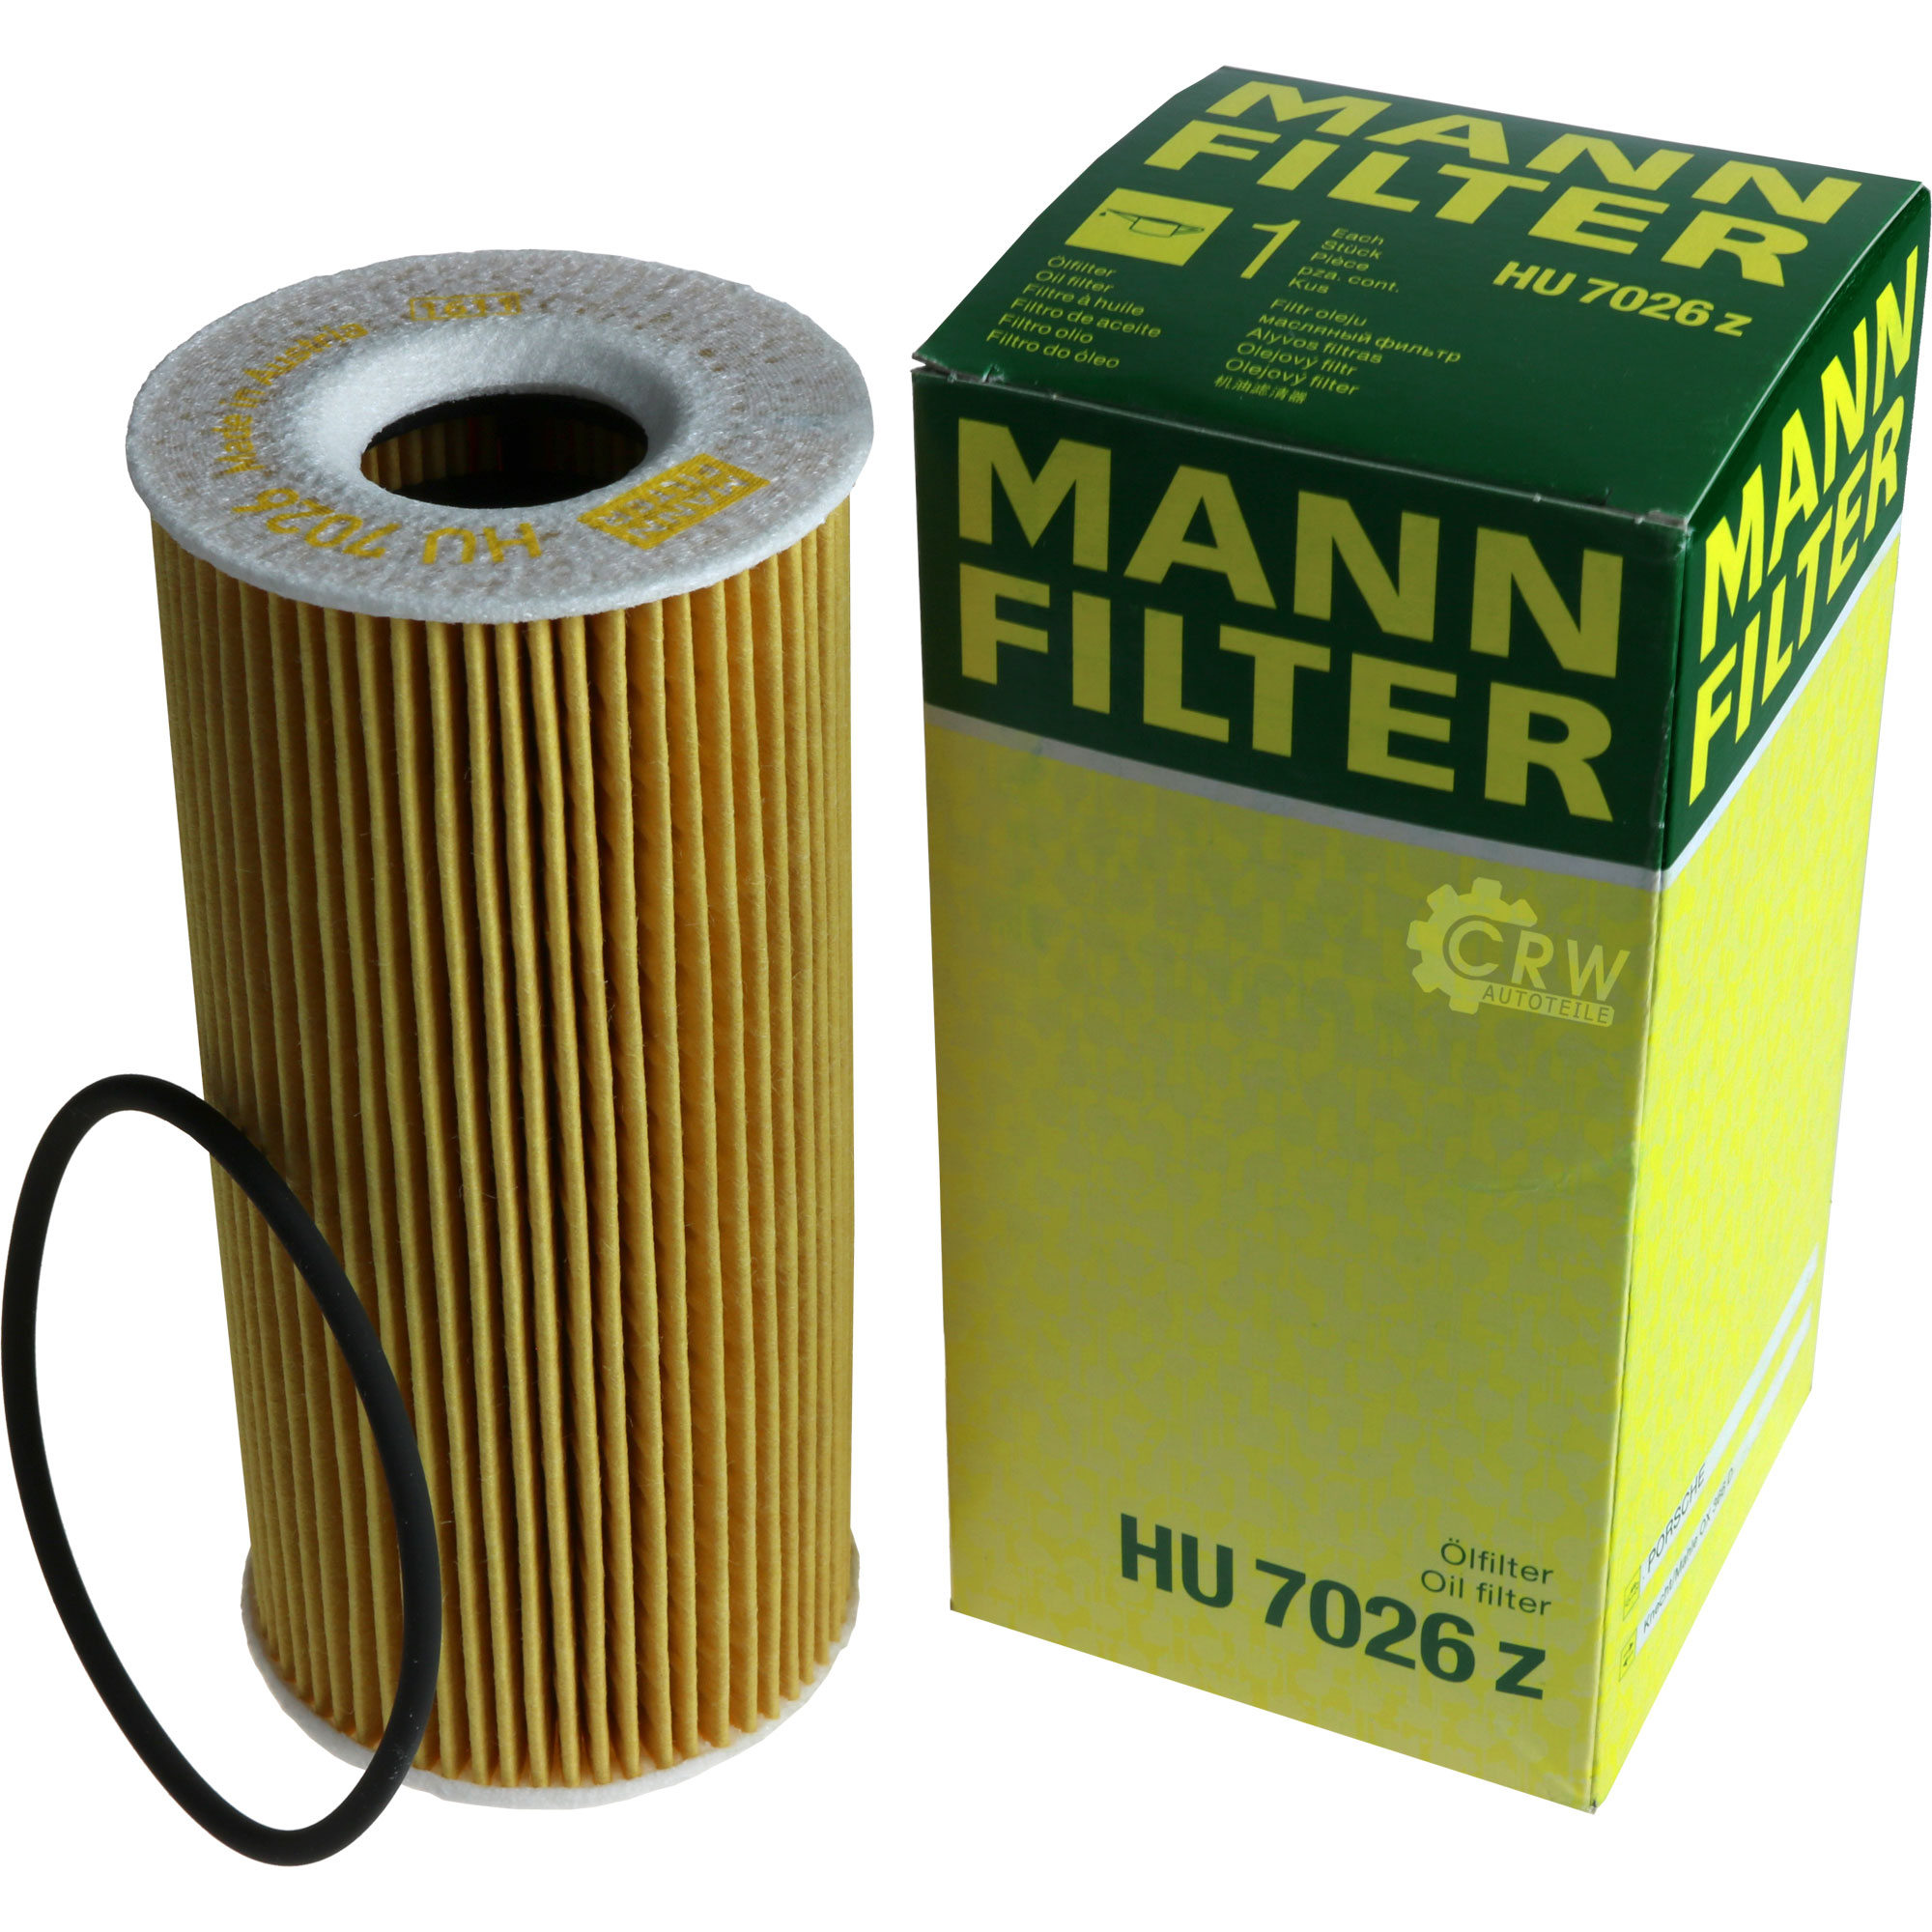 MANN-FILTER Ölfilter HU 7026 z Oil Filter